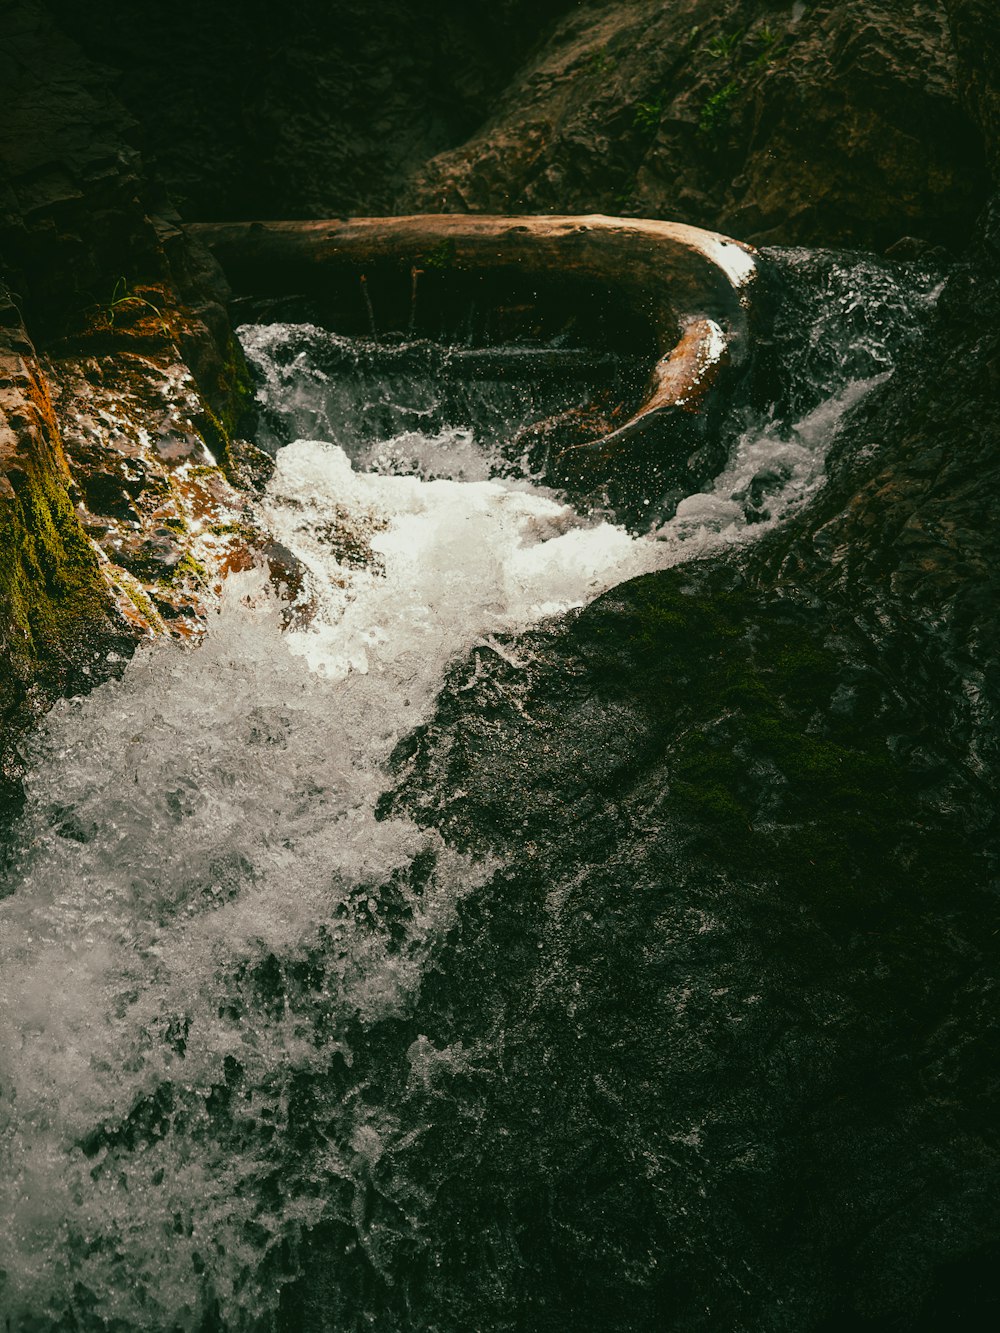 a small stream running through a rocky area